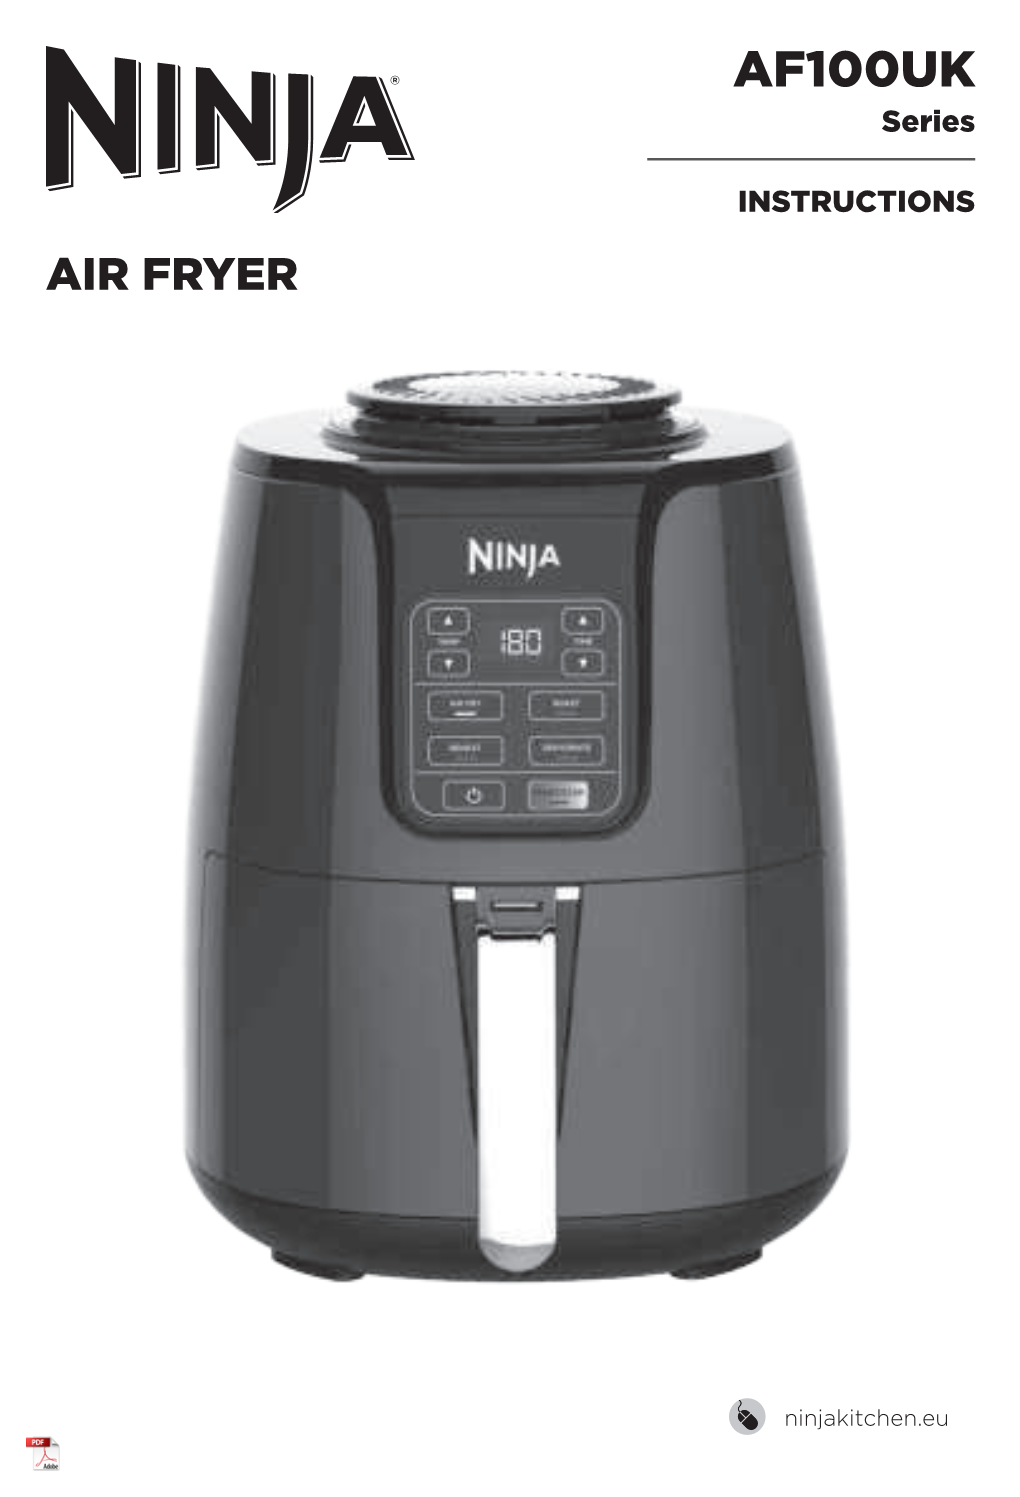 NINJA Air Fryer Instructions